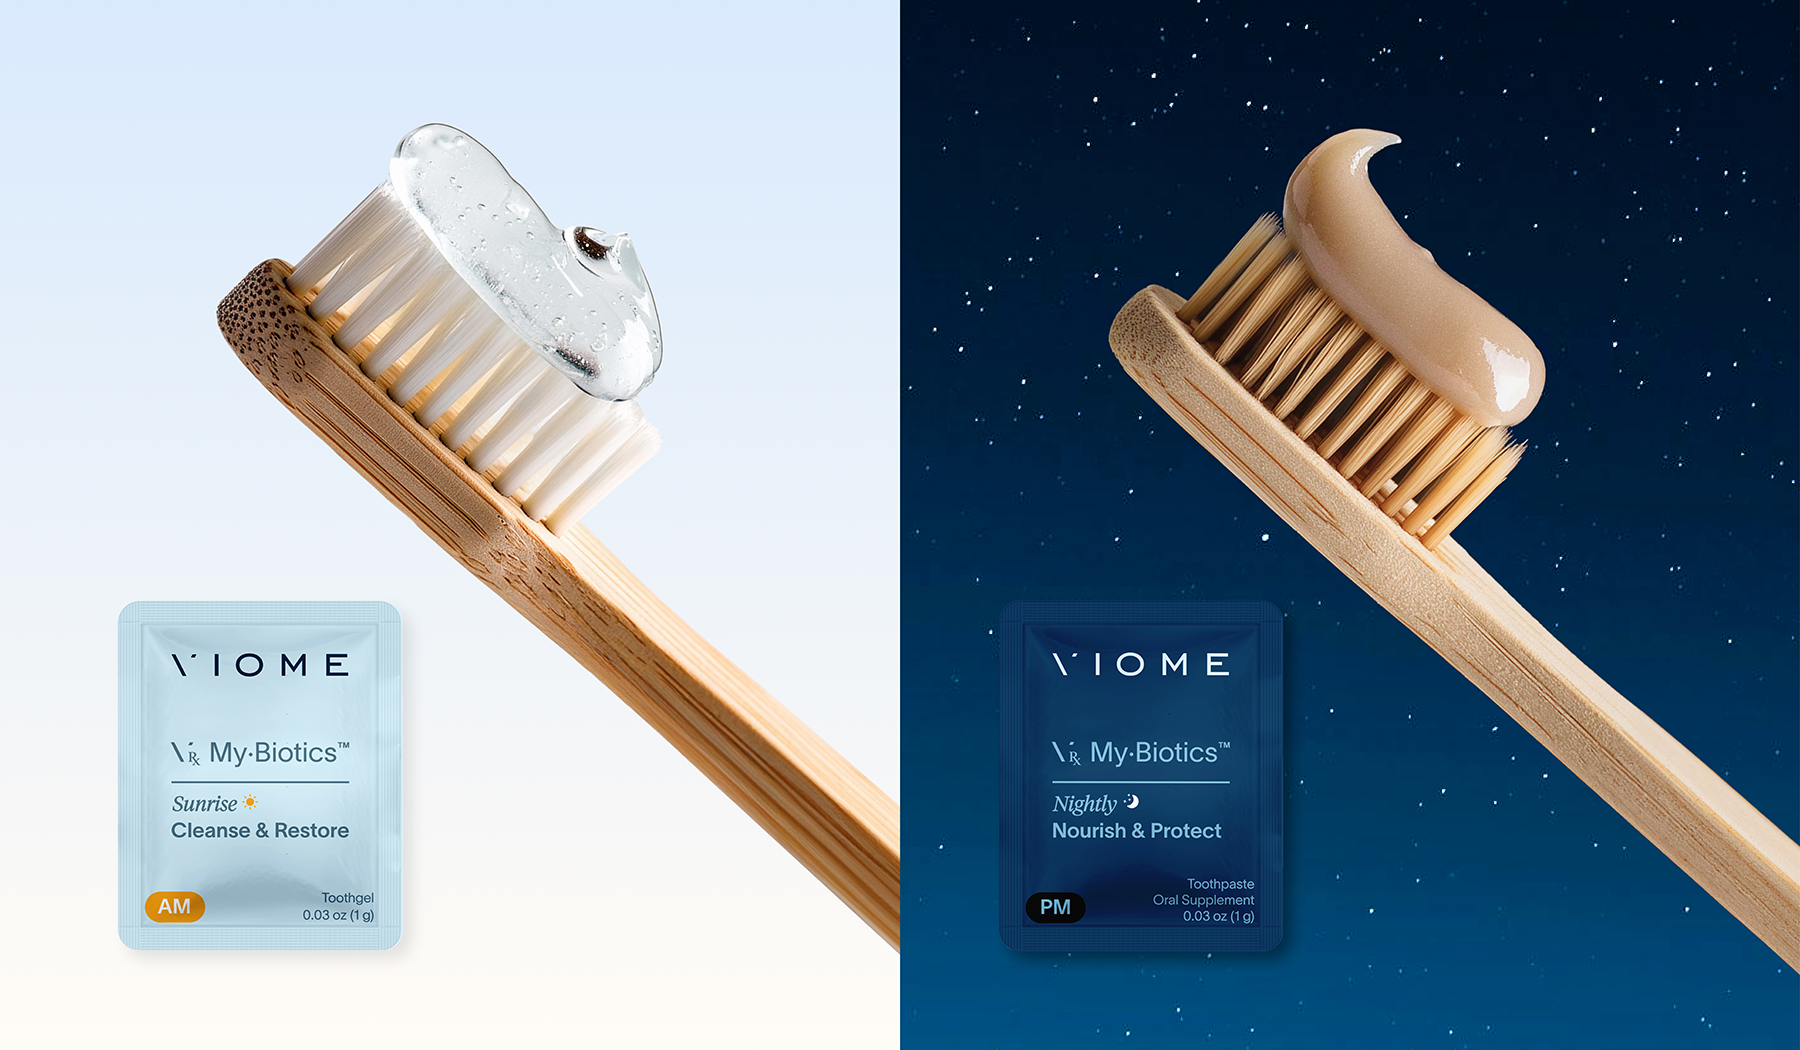 VRx MyBiotics Toothpaste & Gel from Viome | Image Credit: © Viome